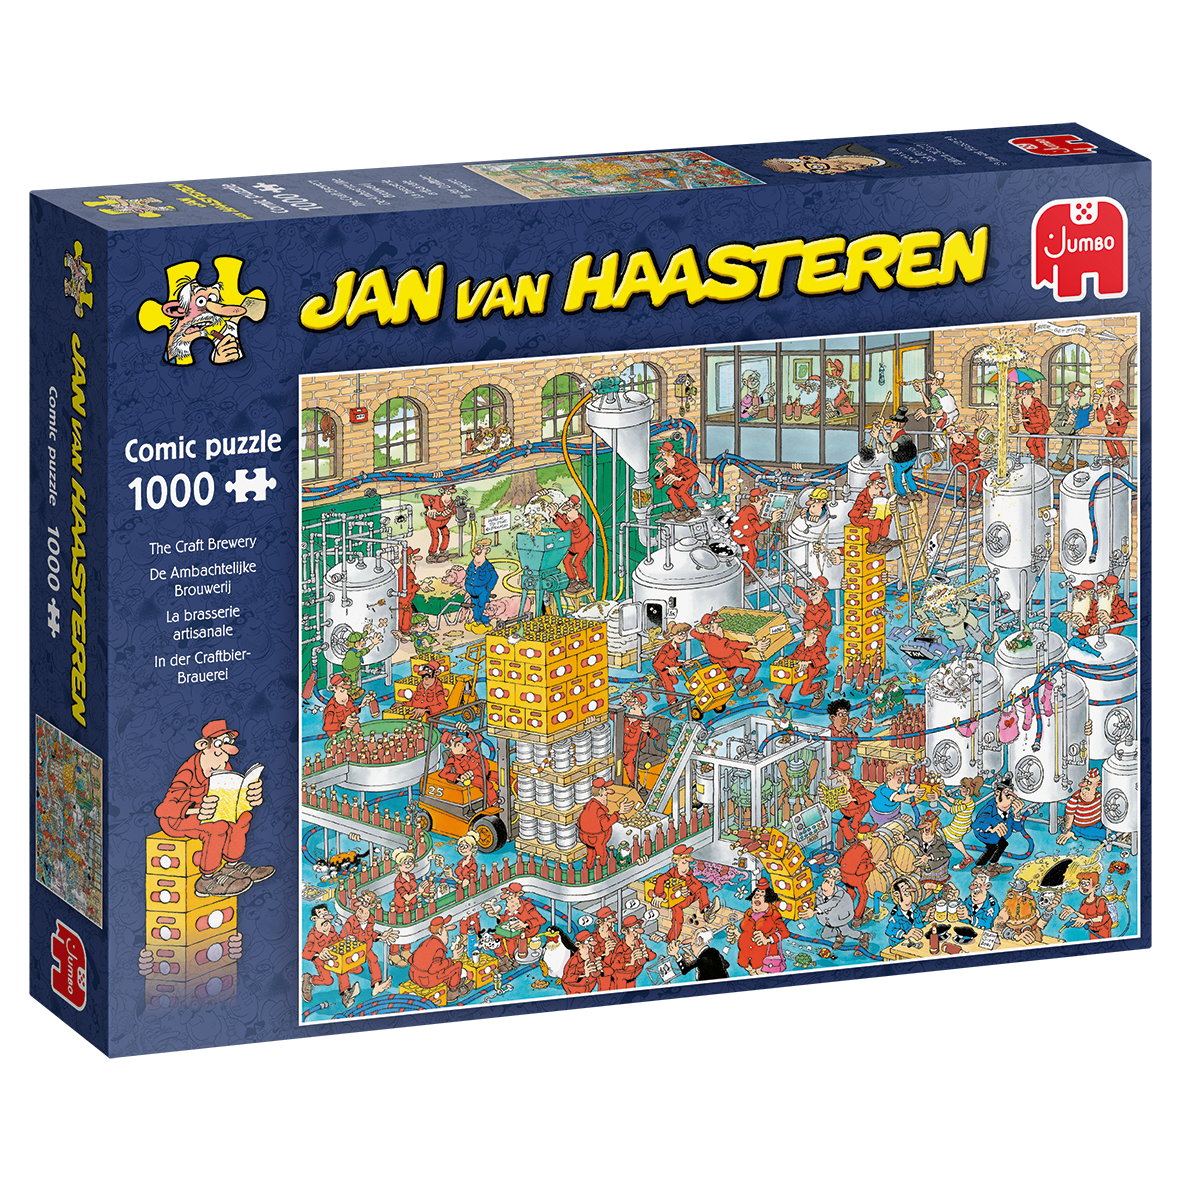 The Craft Brewery Jan van Haasteren